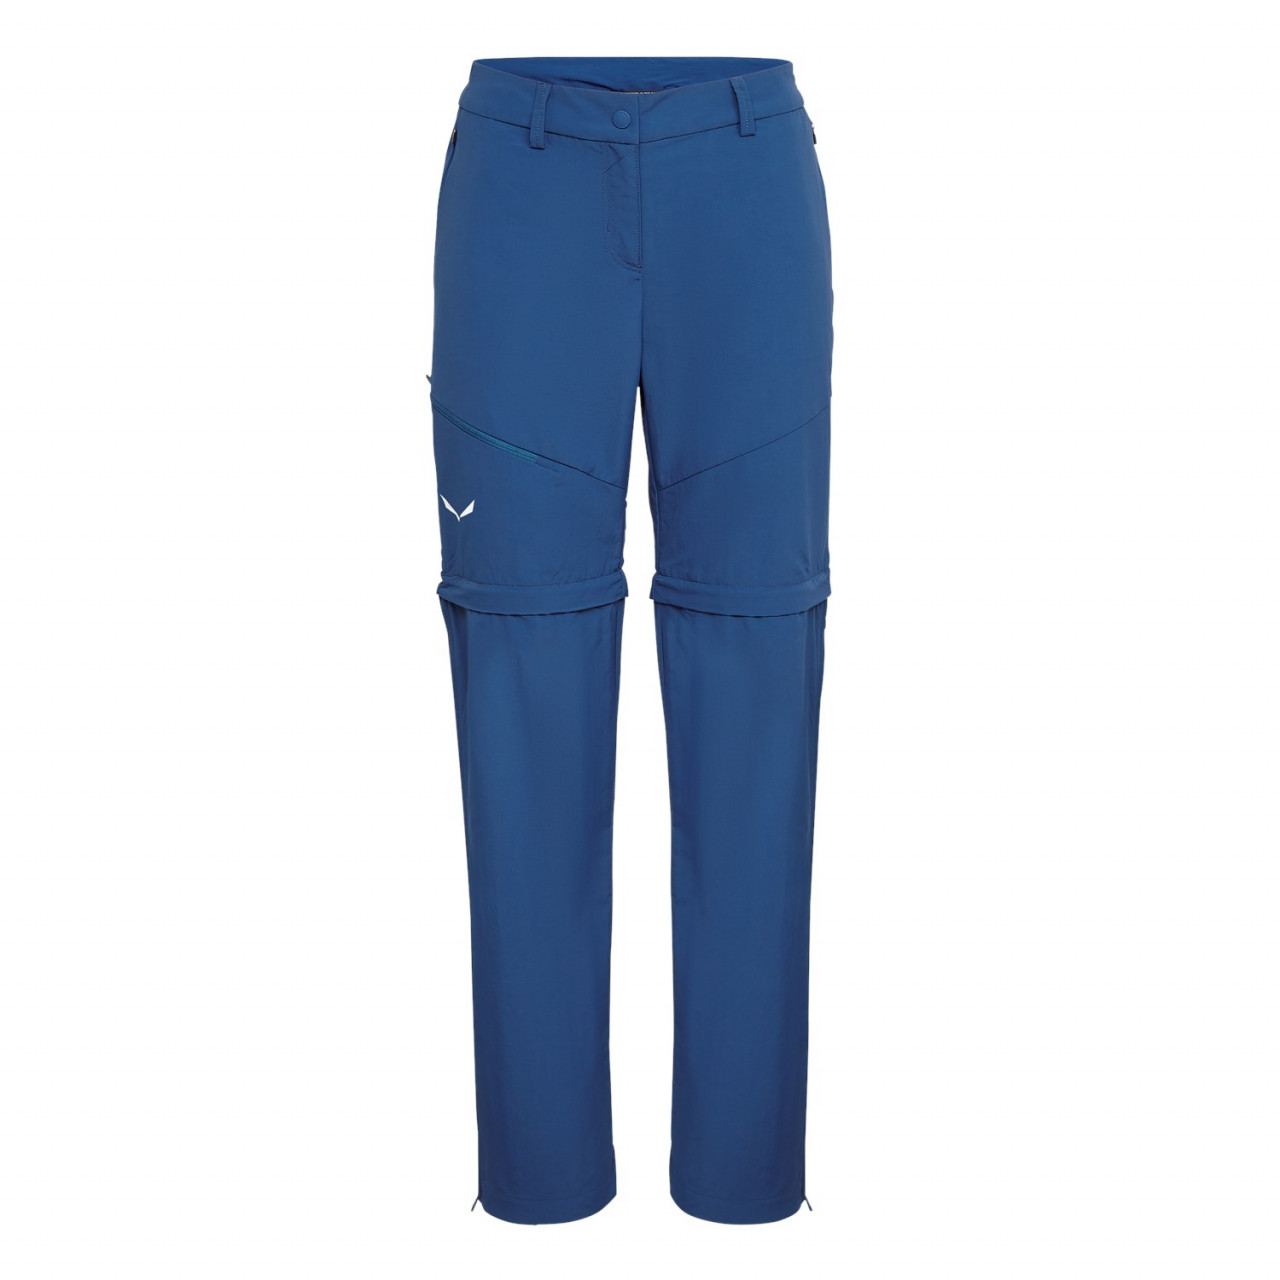 Salewa Isea Dry 2/1 Argentina - Pantalones Softshell Mujer - Azules/Azul Marino - DKSR-52017